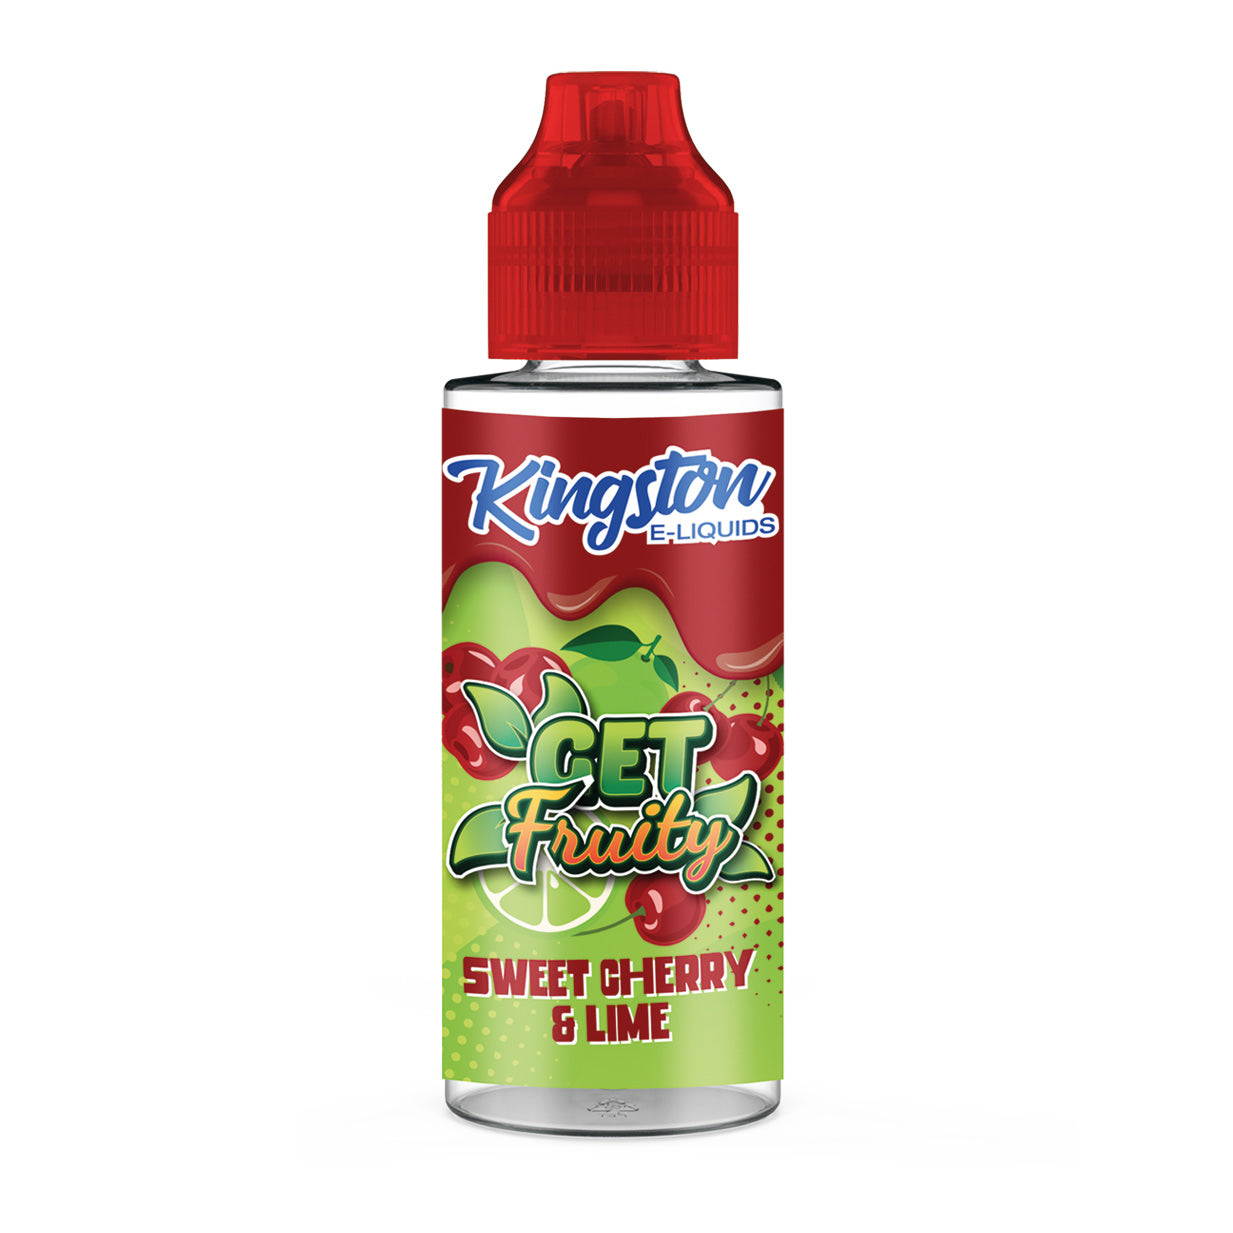 Kingston-Get-Fruity-Sweet-Cherry-Lime-kingston-e-liquids-100ml-vape-juice-eliquidsoutlet-e-juice-shortfill